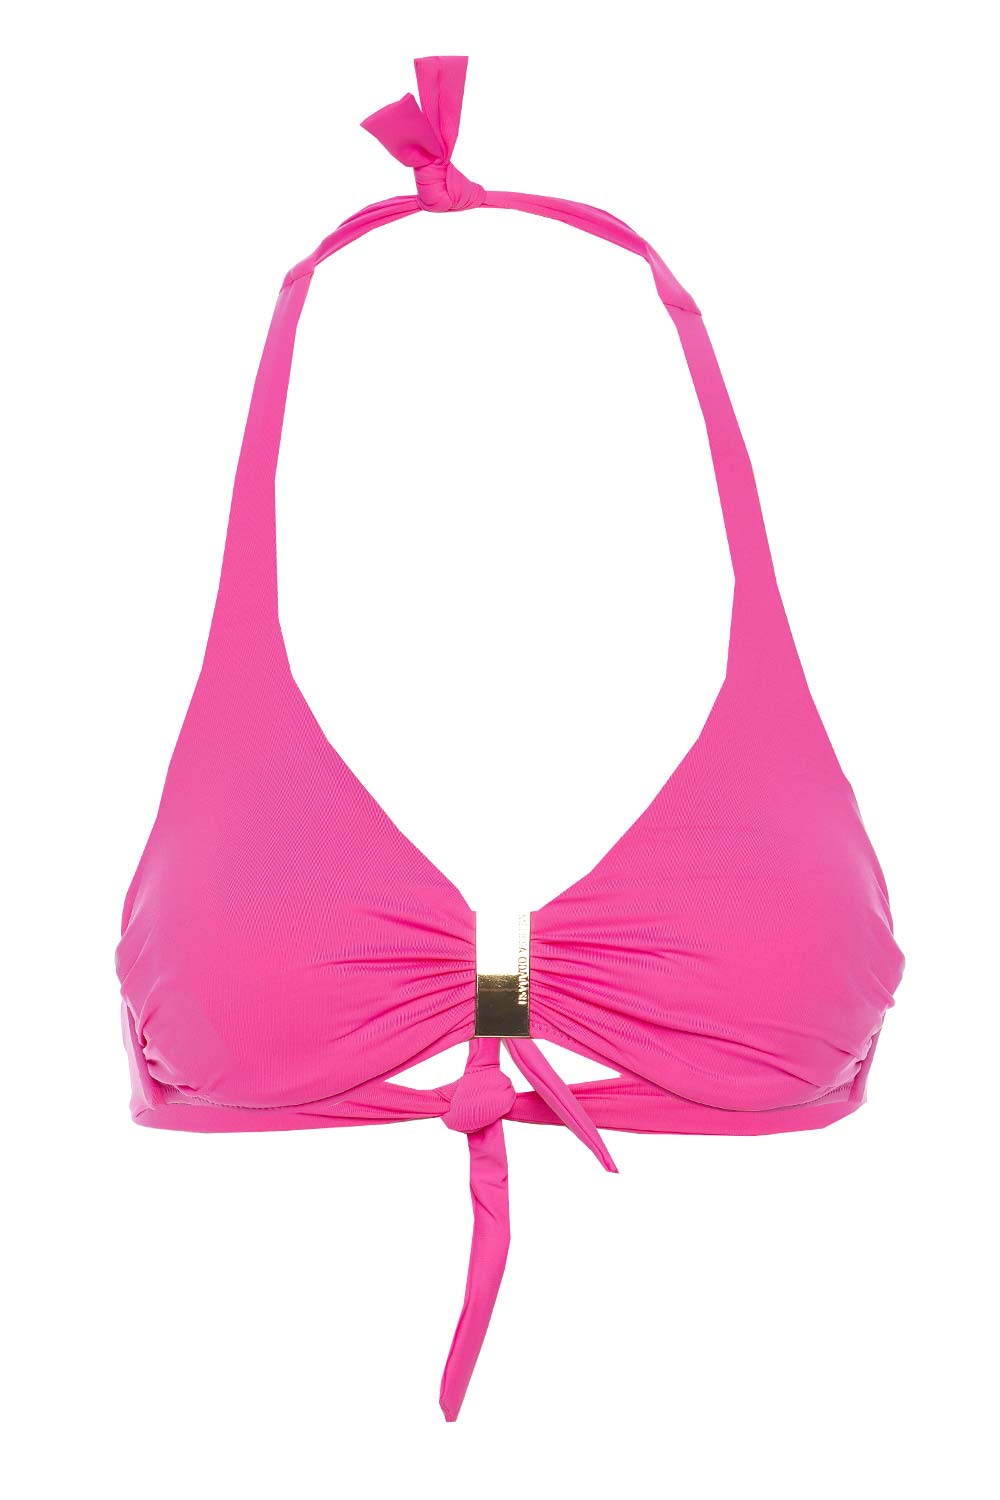 Melissa Odabash Provence Hot Pink Halterneck Bikini Top